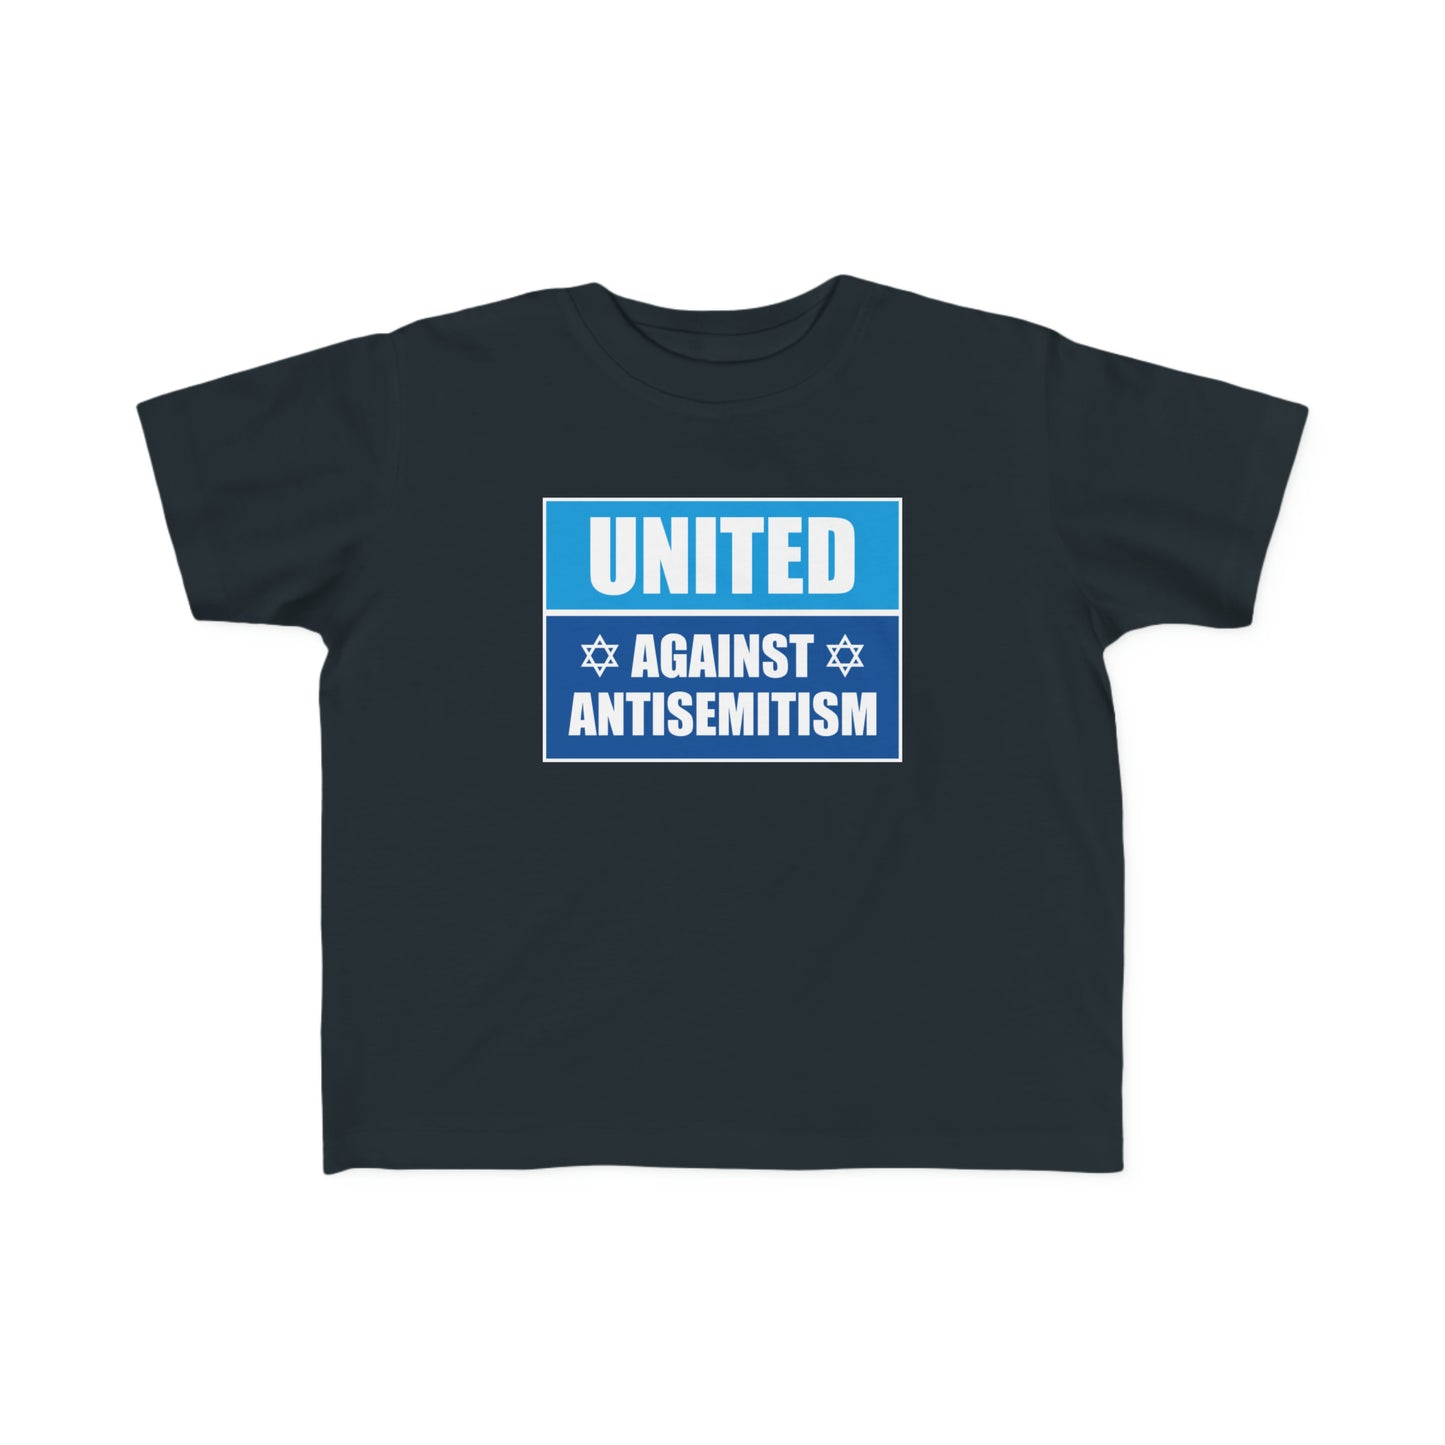 “United Against Antisemitism” Toddler's Tee